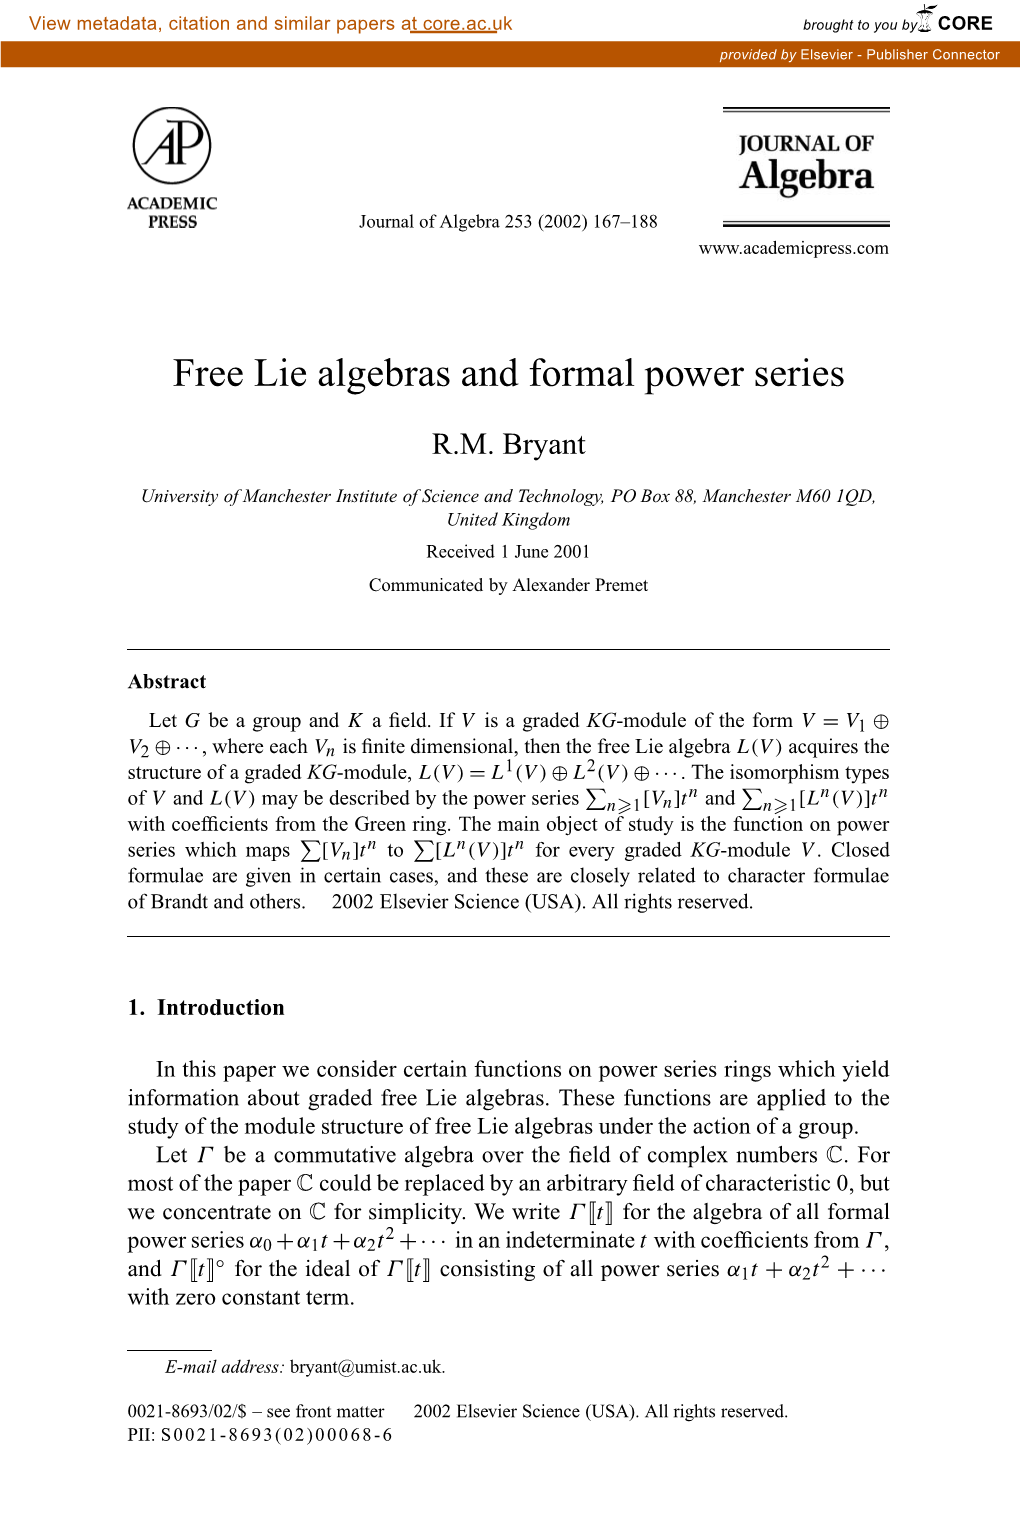 Free Lie Algebras and Formal Power Series